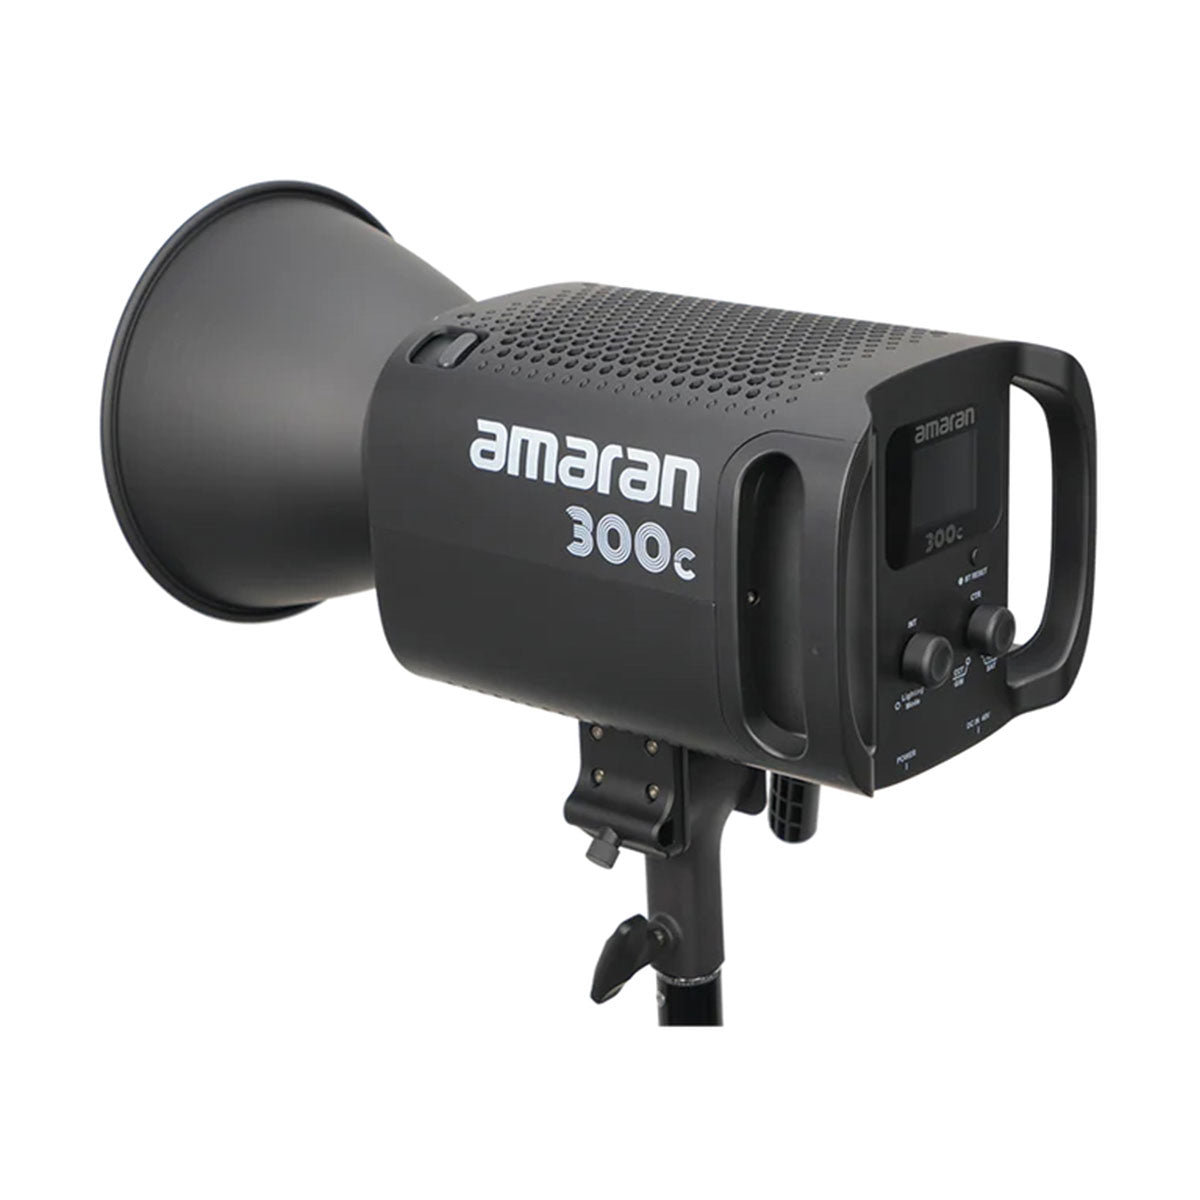 Amaran 300c RGB LED Light (Deep Gray)